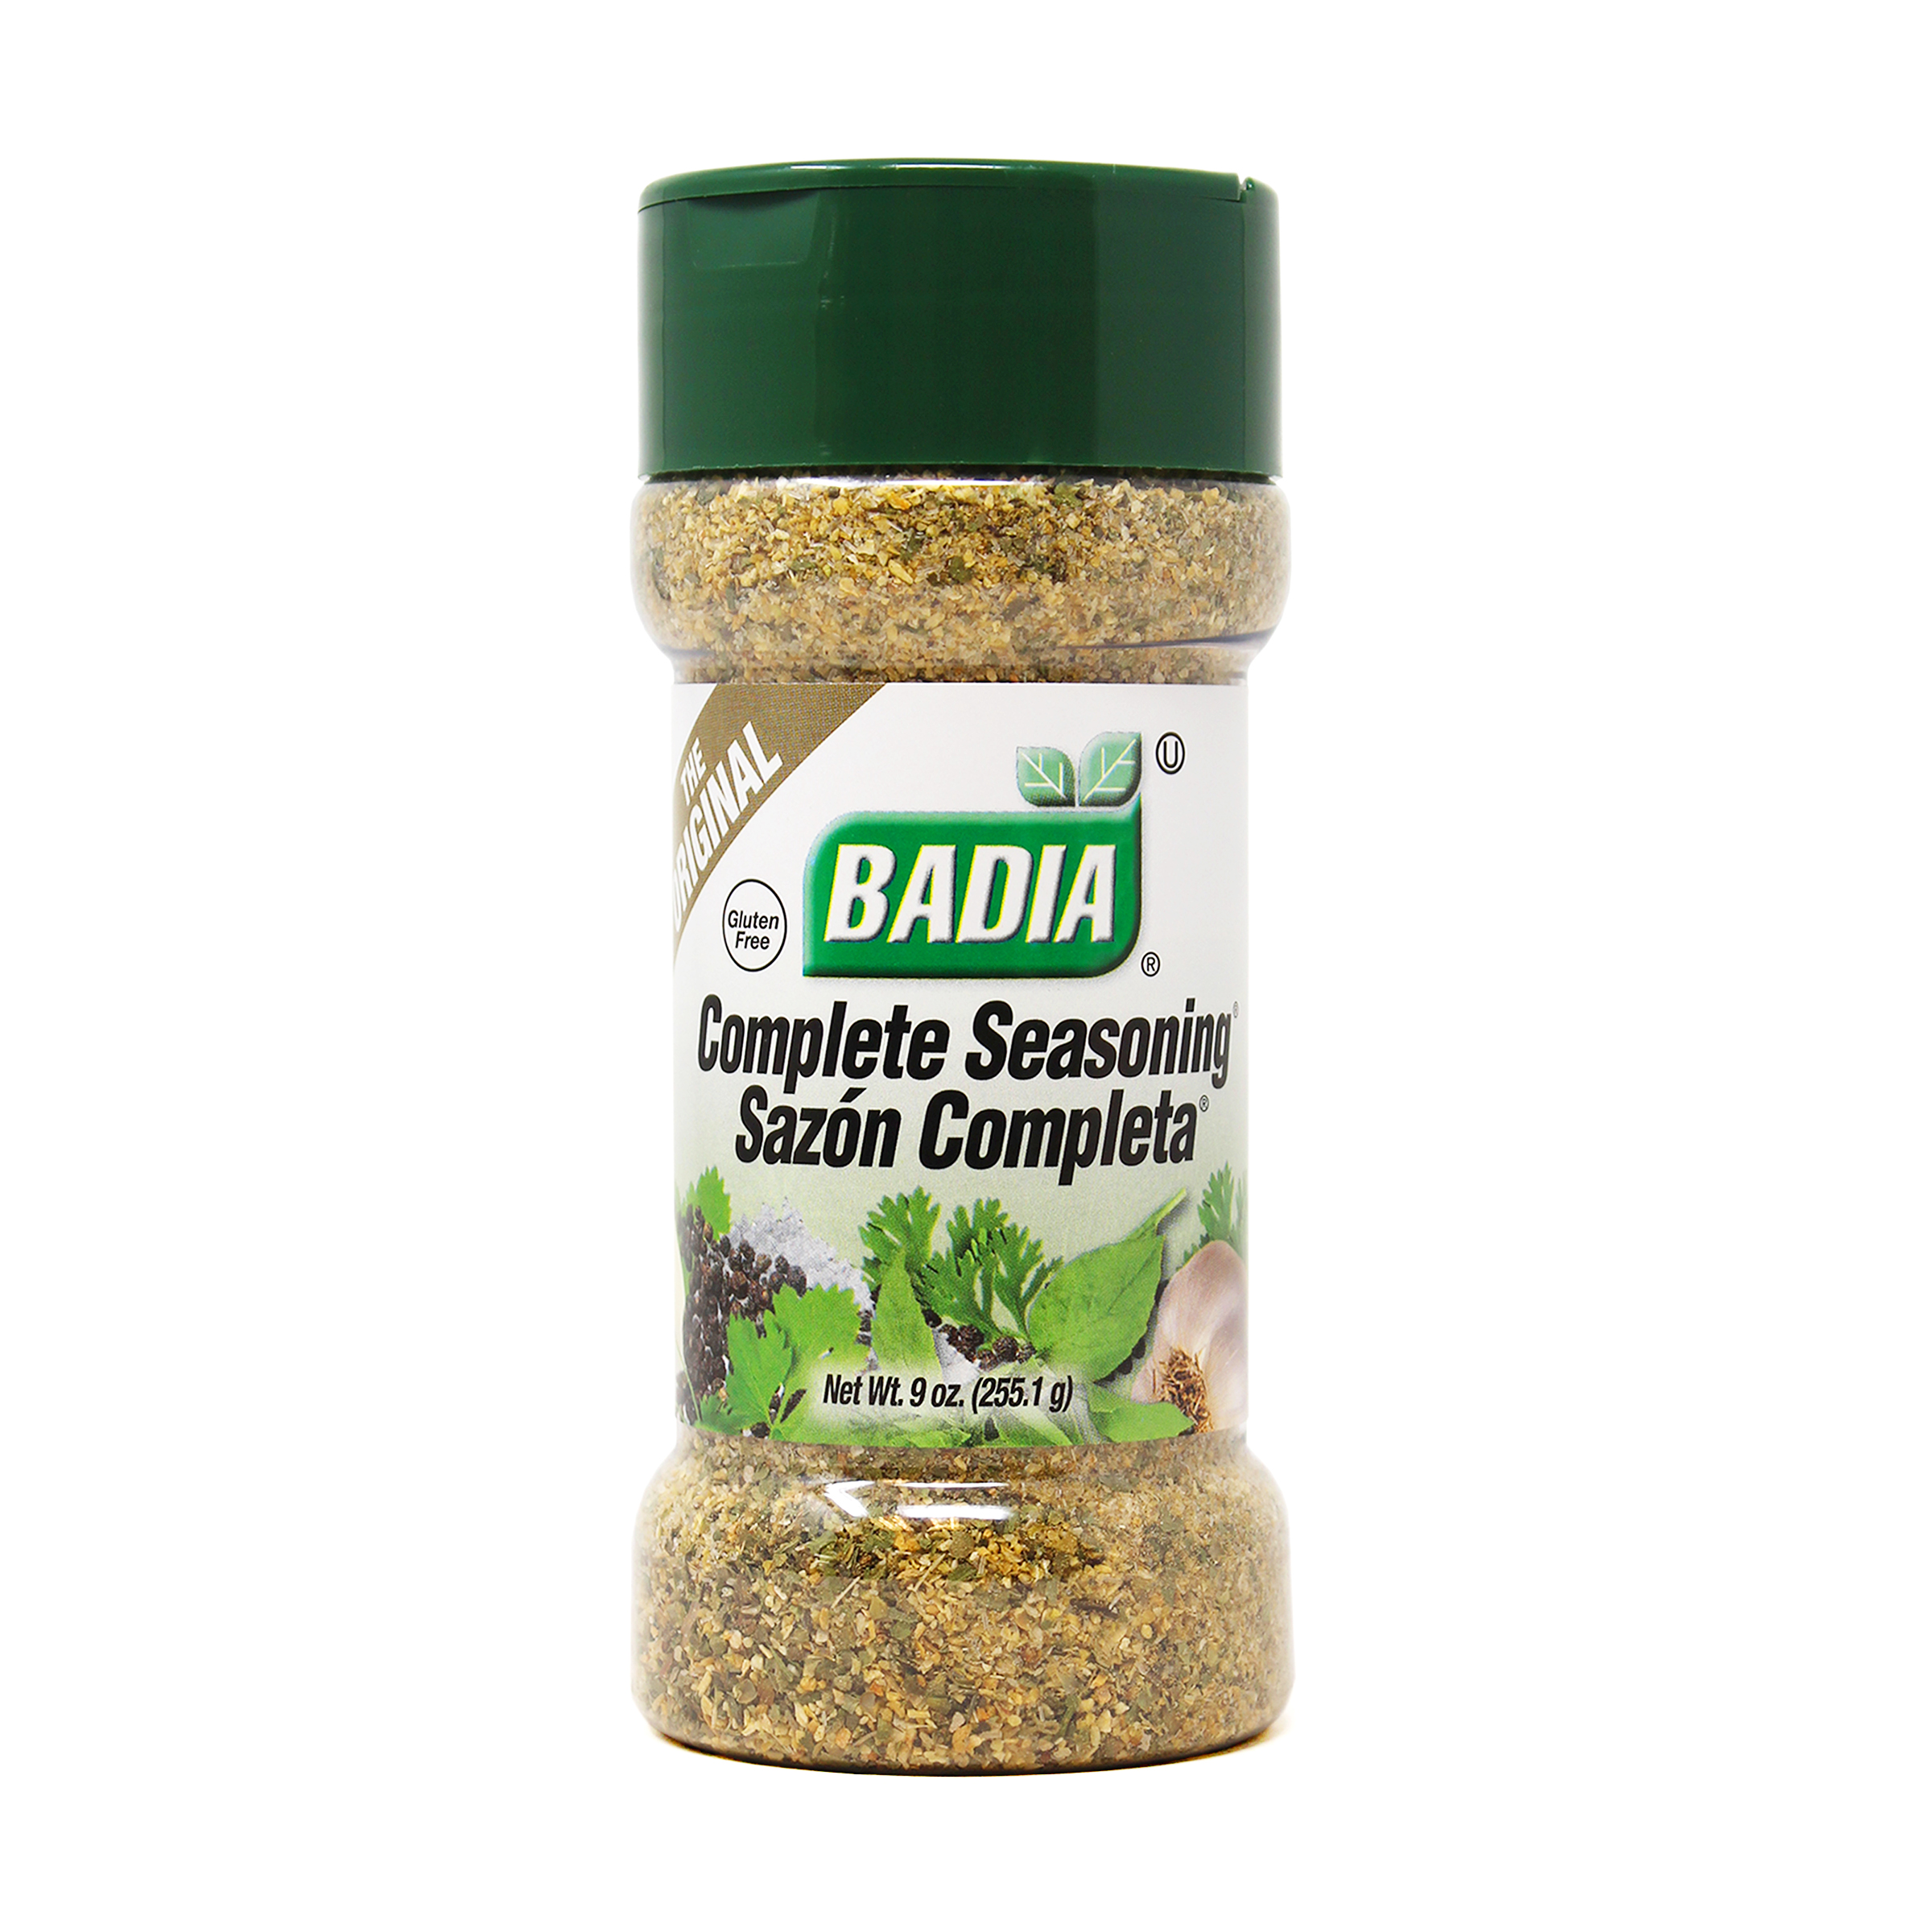 Badia Complete Seasoning & Adobo Sazon Tropical Sampler Bundle - Badia  Complete Seasoning 3.5 Oz - Adobo with & without Pepper 2.75 each - Sazon